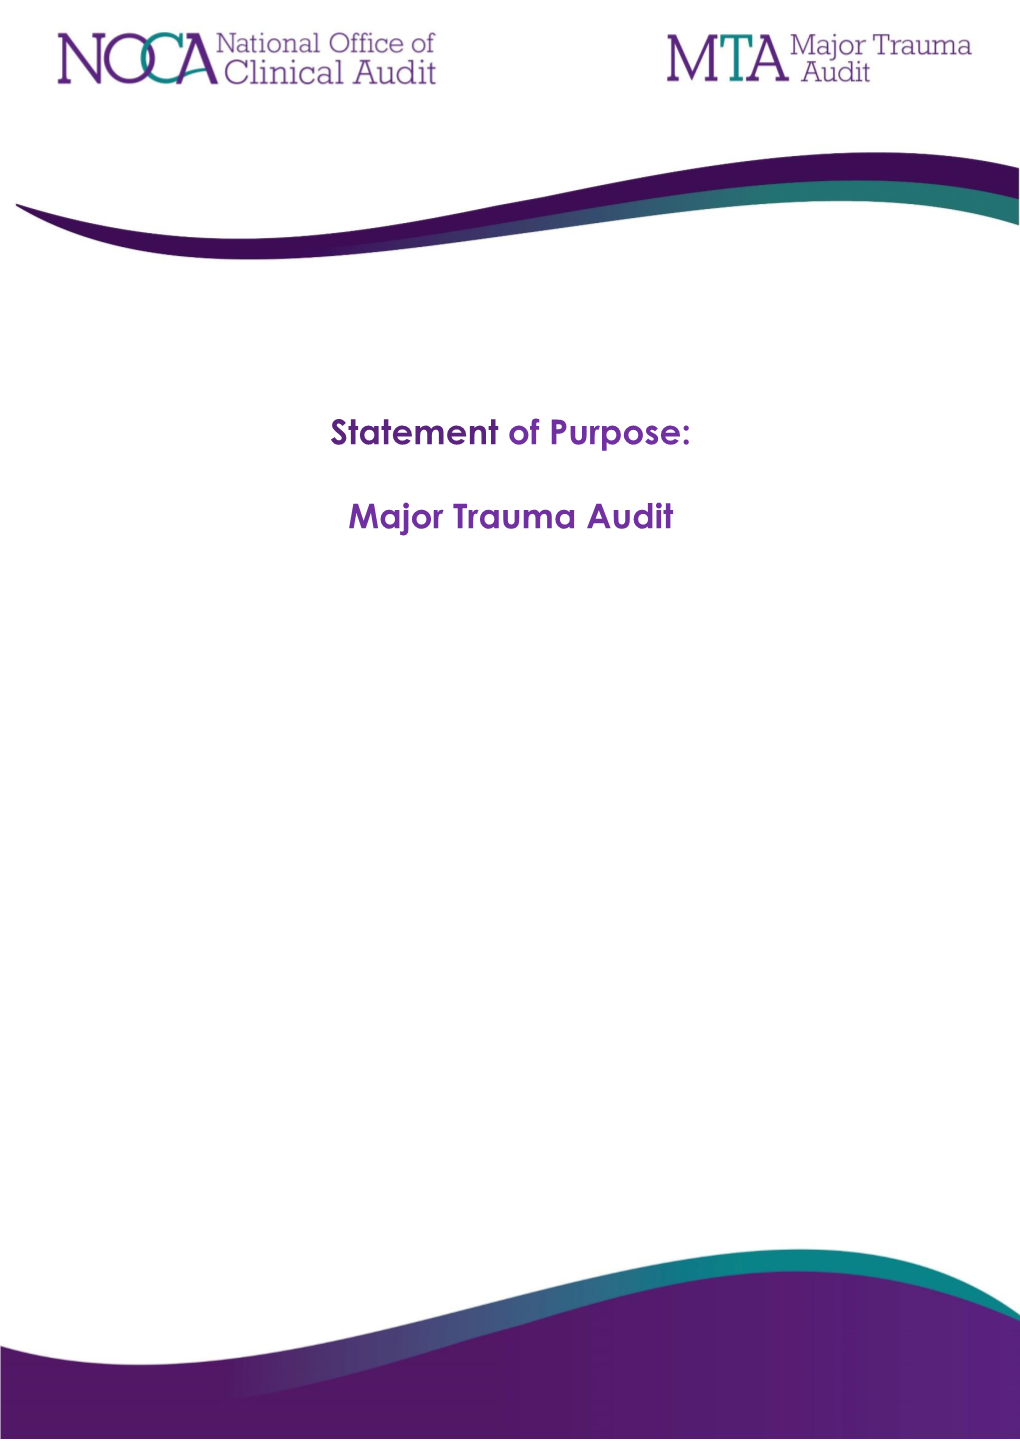 Statement of Purpose: Major Trauma Audit